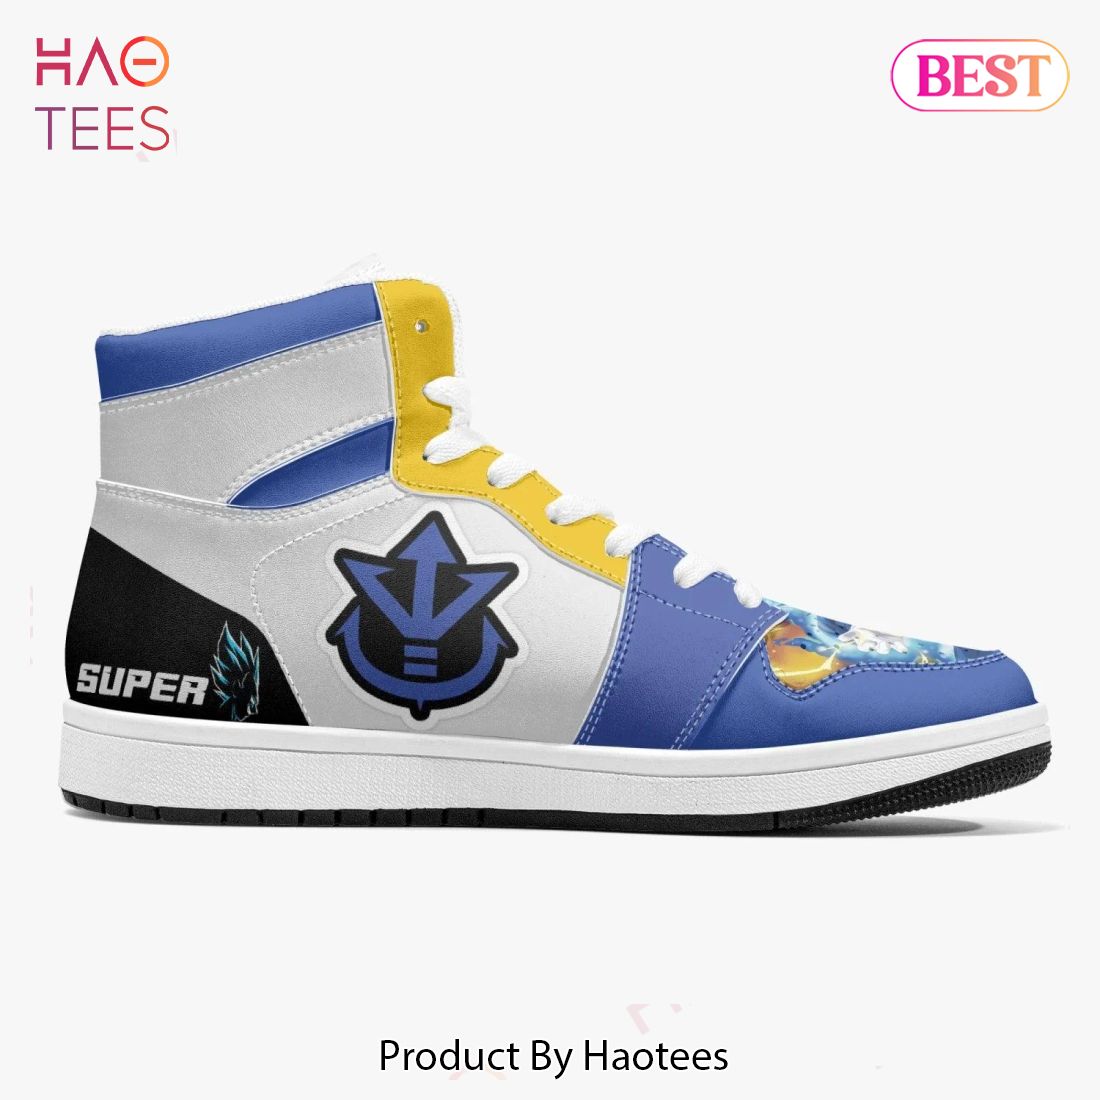 Vegeta Blue Jordan 1 Sneaker Boots, Limited Edition Dragon Ball